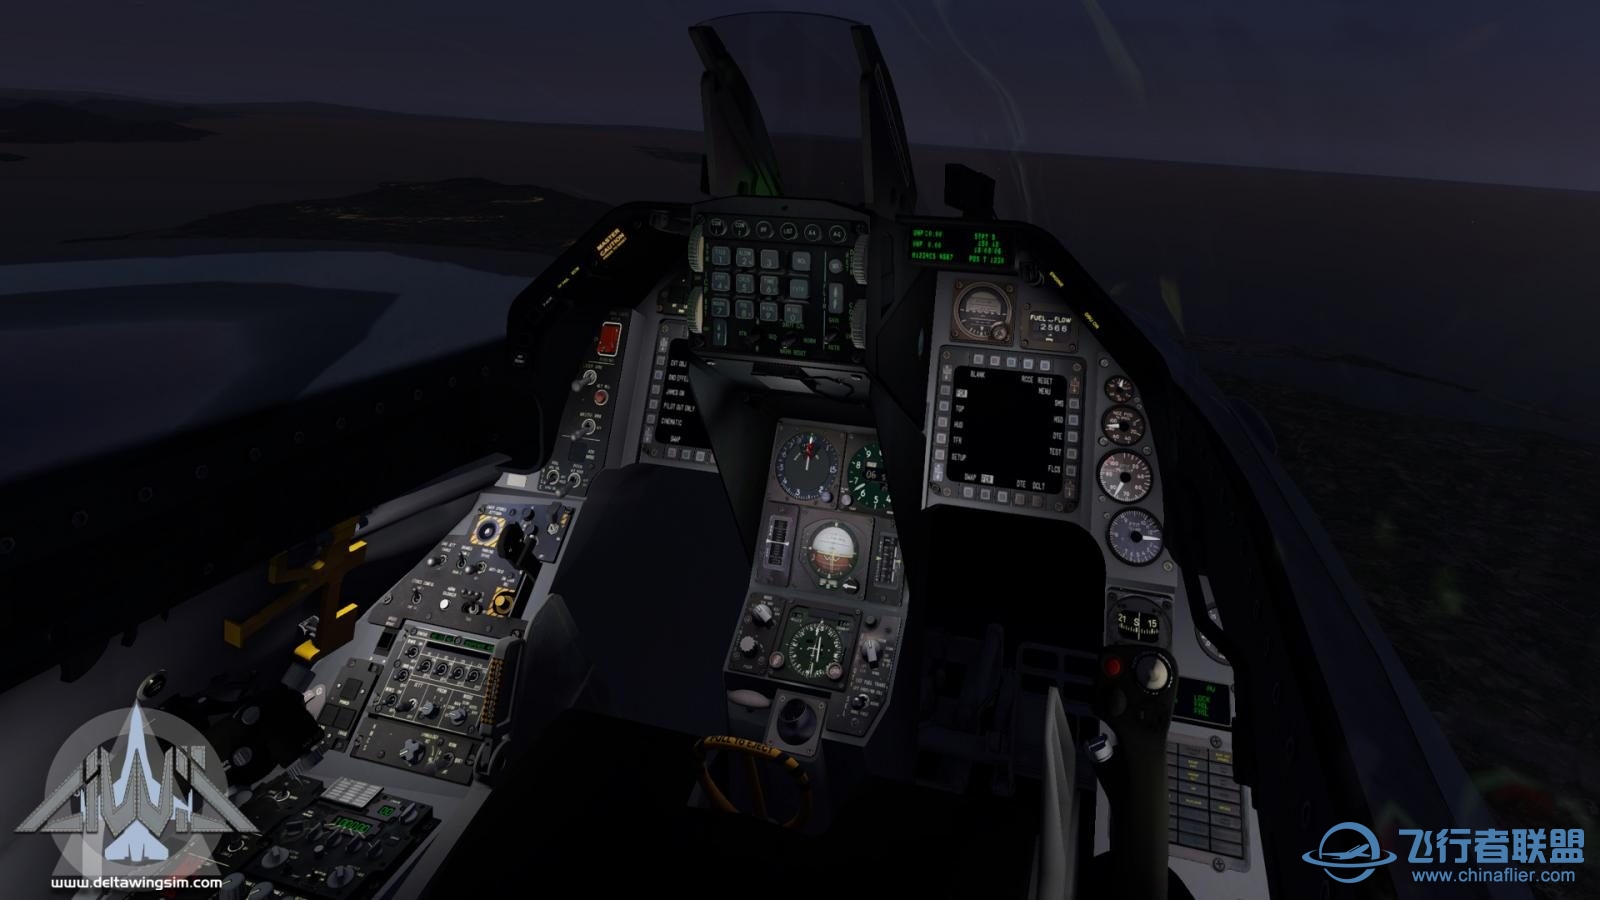 DeltaWing Simulations 发布 F-16C XPL-6195 